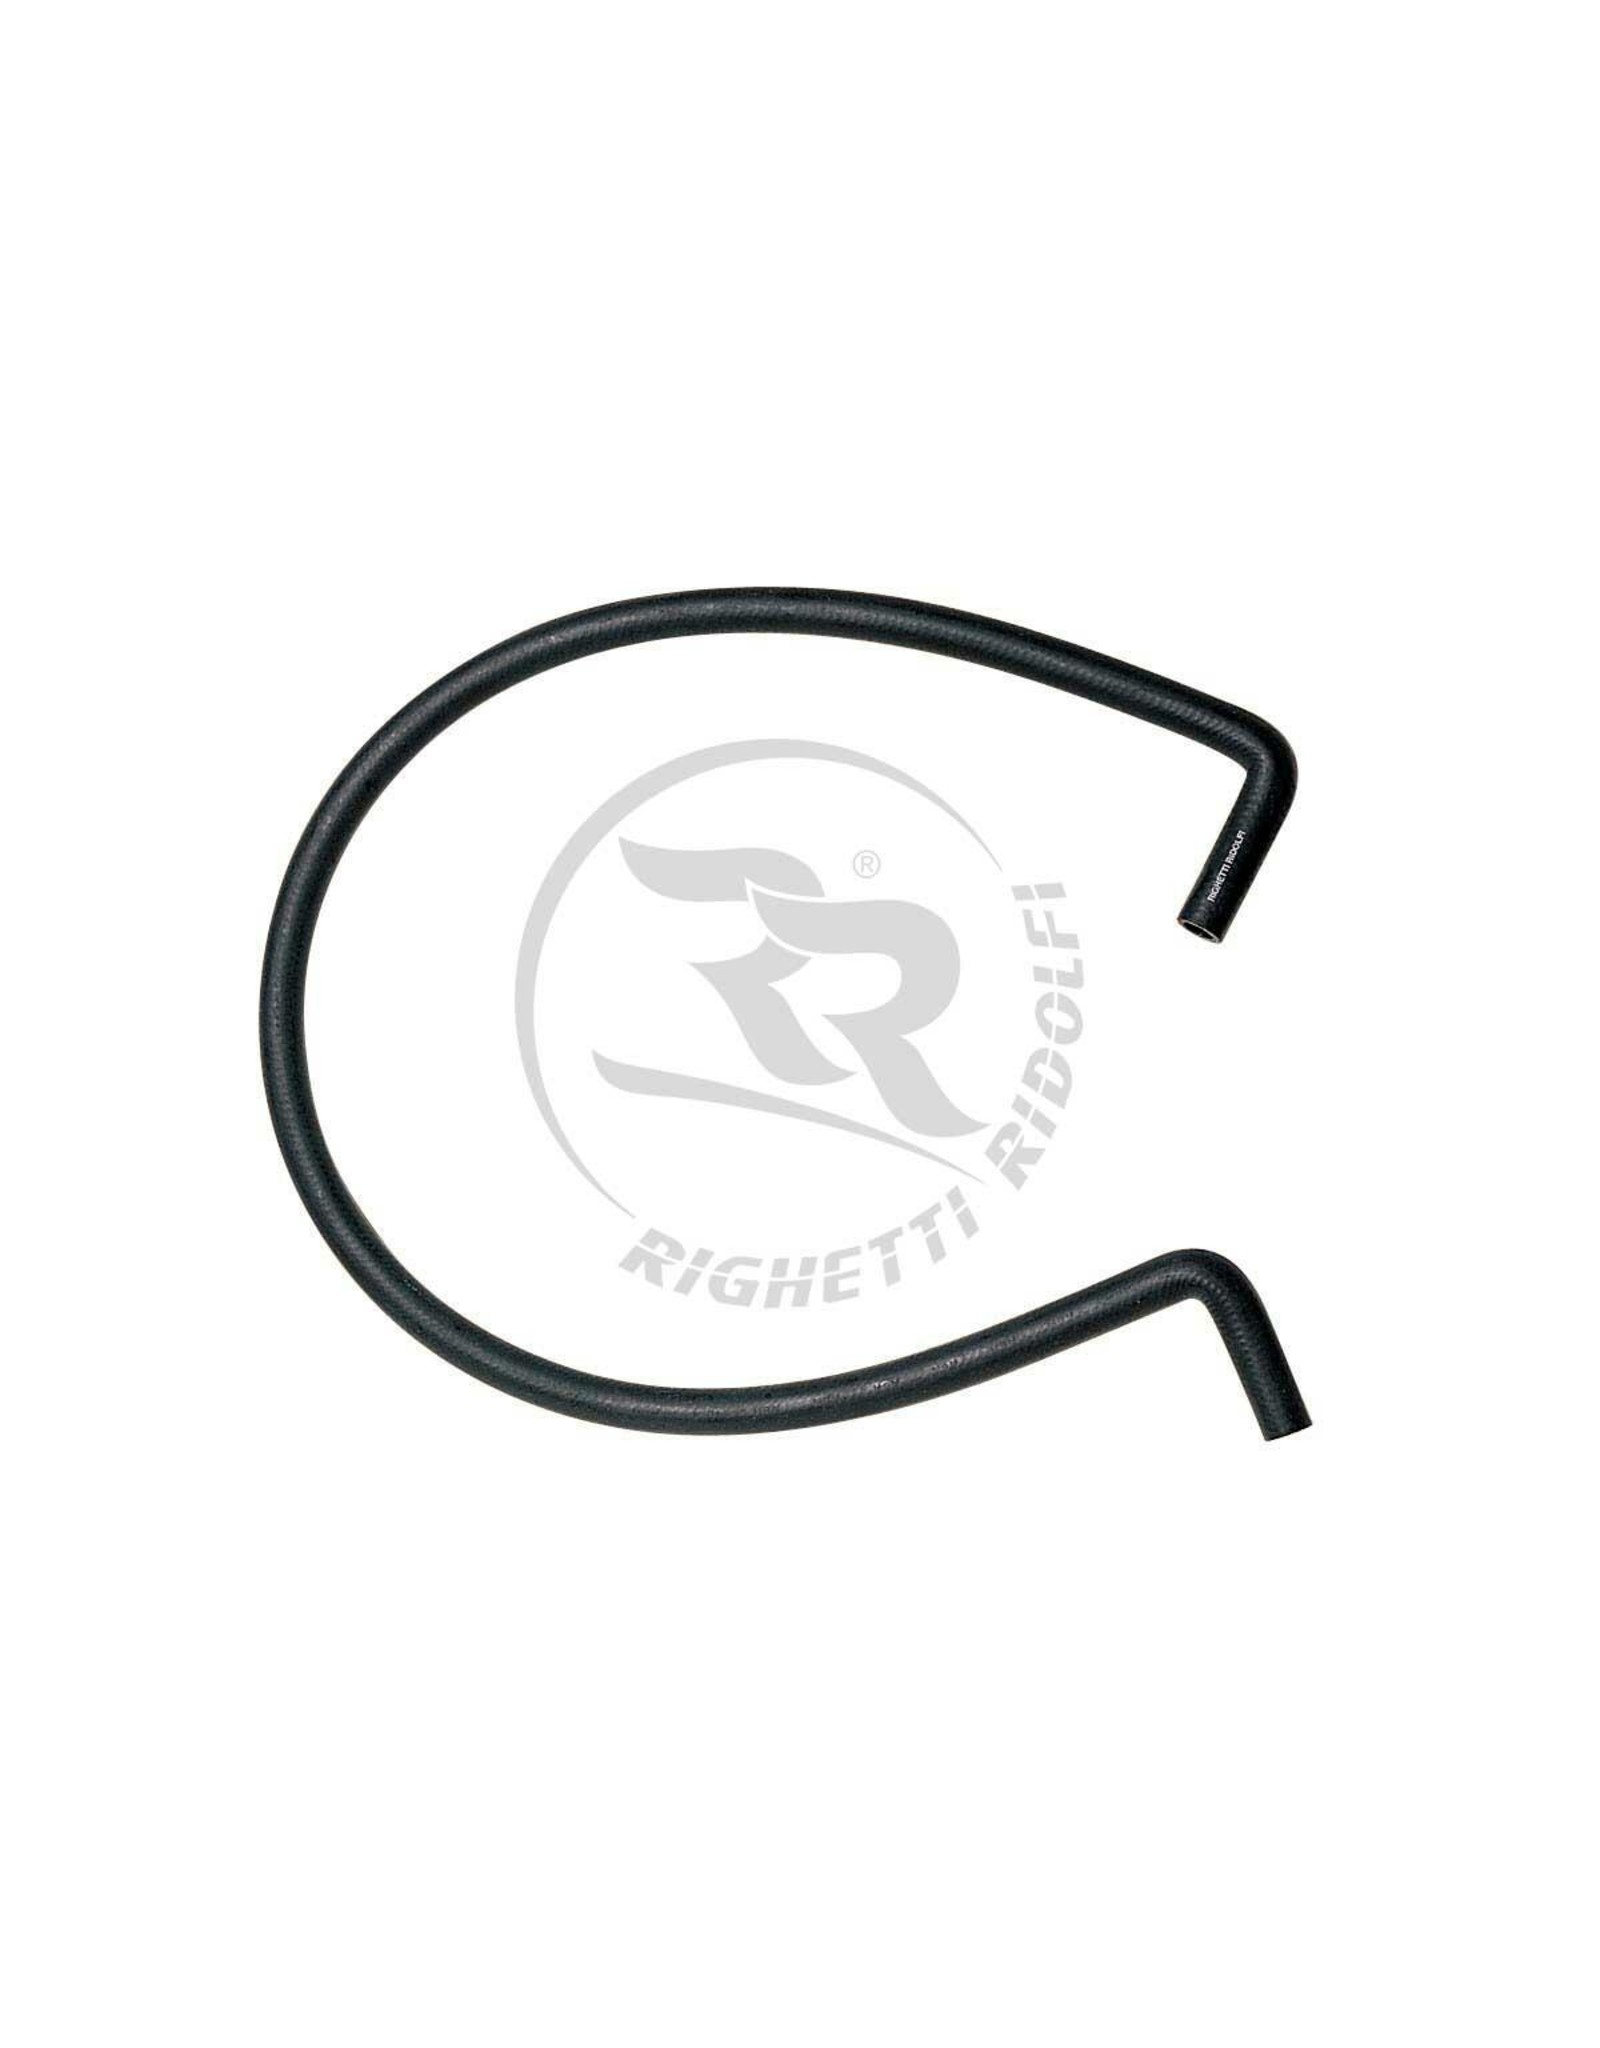 Righetti Ridolfi RR Radiator hose PIPE 90° - LENGTH 1200mm - BLACK COLOUR